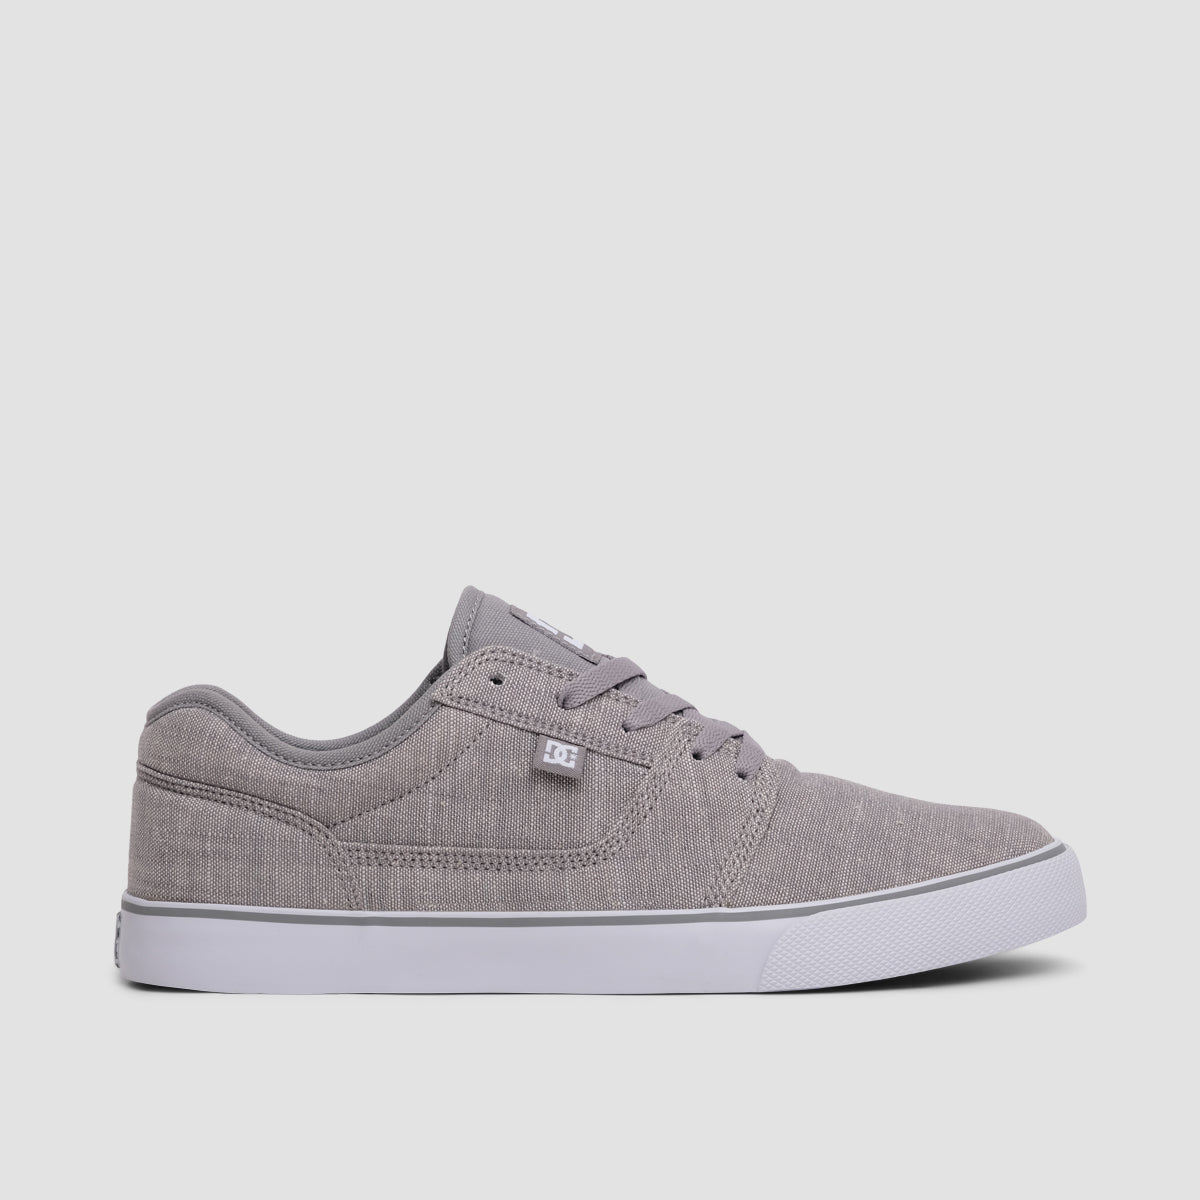 DC Tonik TX SE Shoes - Grey/Light Grey